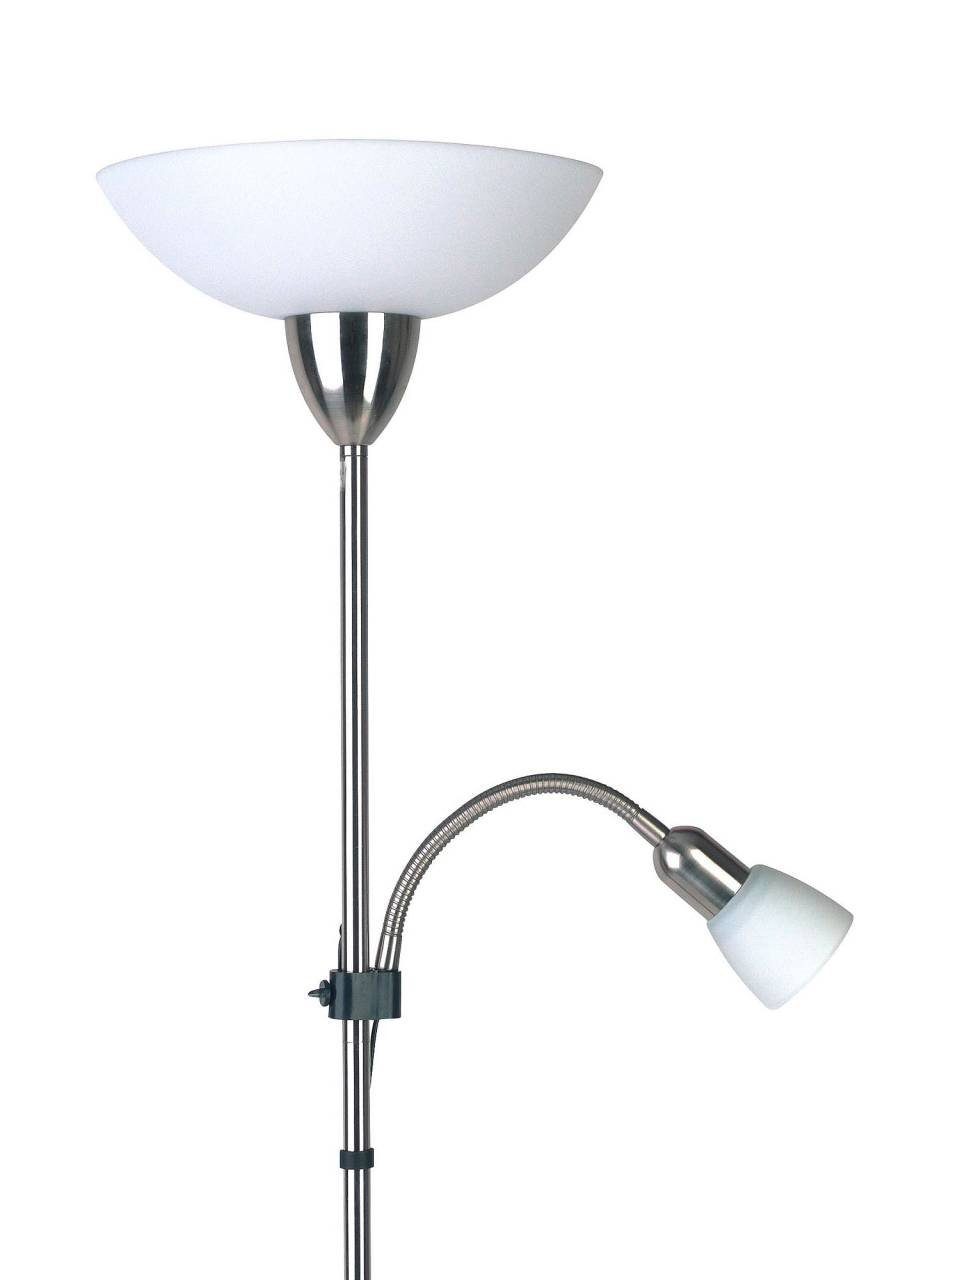 Lesearm 60W, eisen/weiß 1x Lampe A60, g Stehlampe Brilliant Deckenfluter Darlington, E27, Darlington